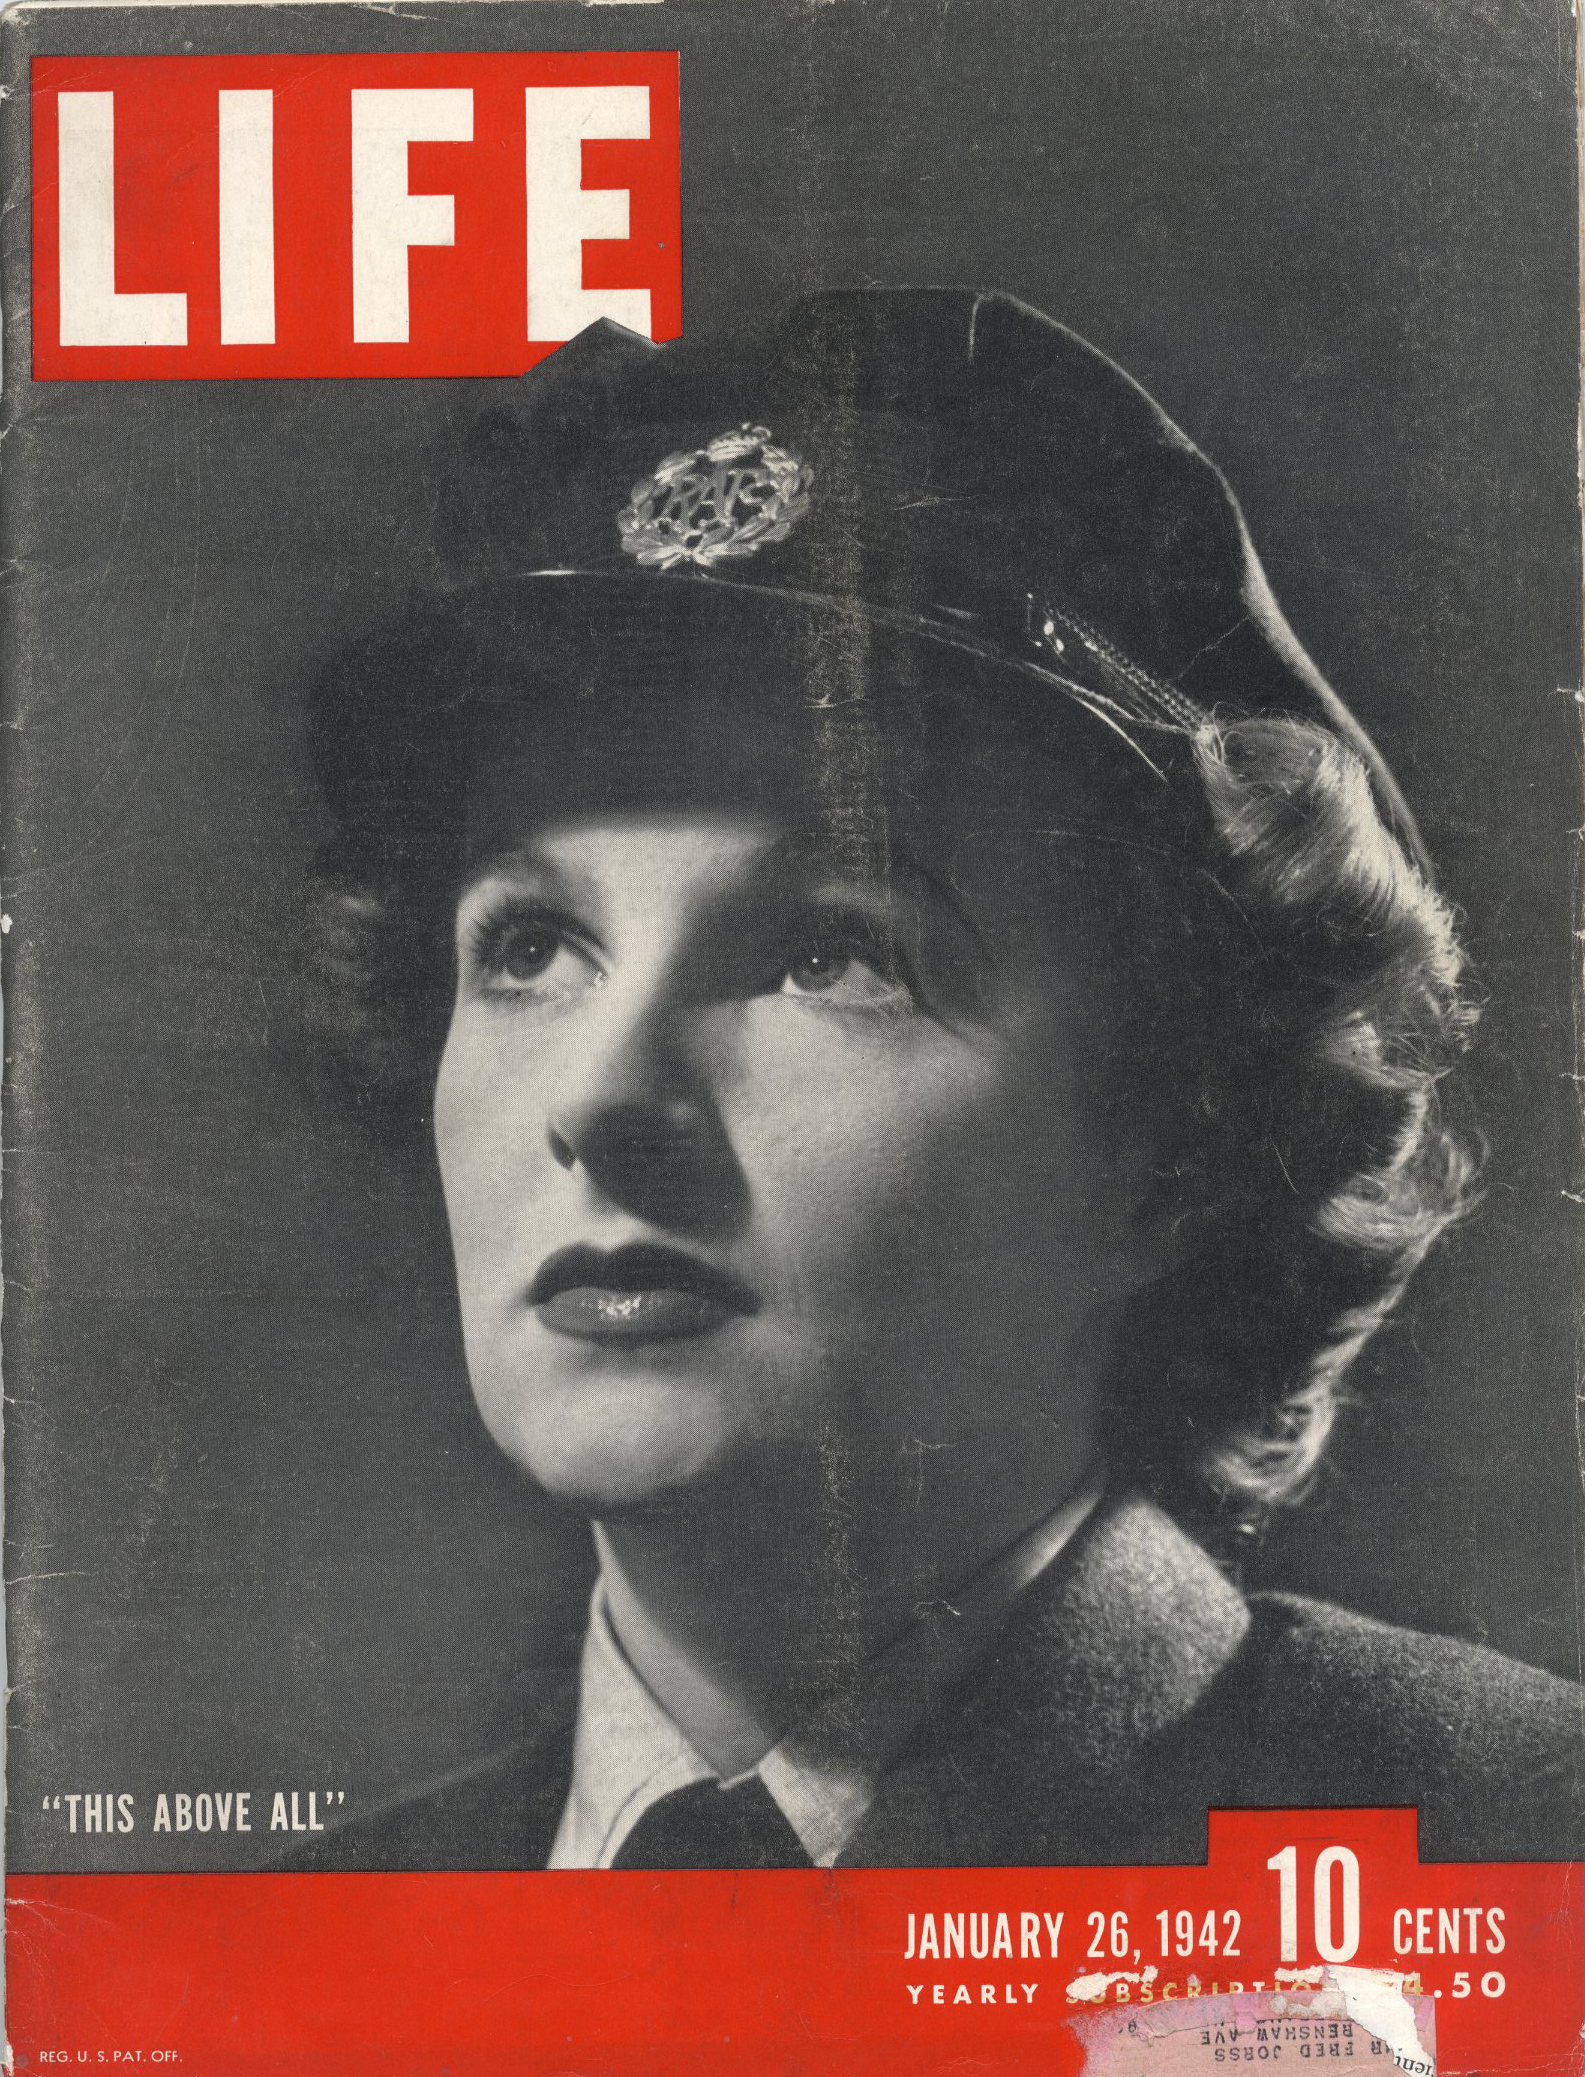 LIFE Magazine 1940's and 1960's